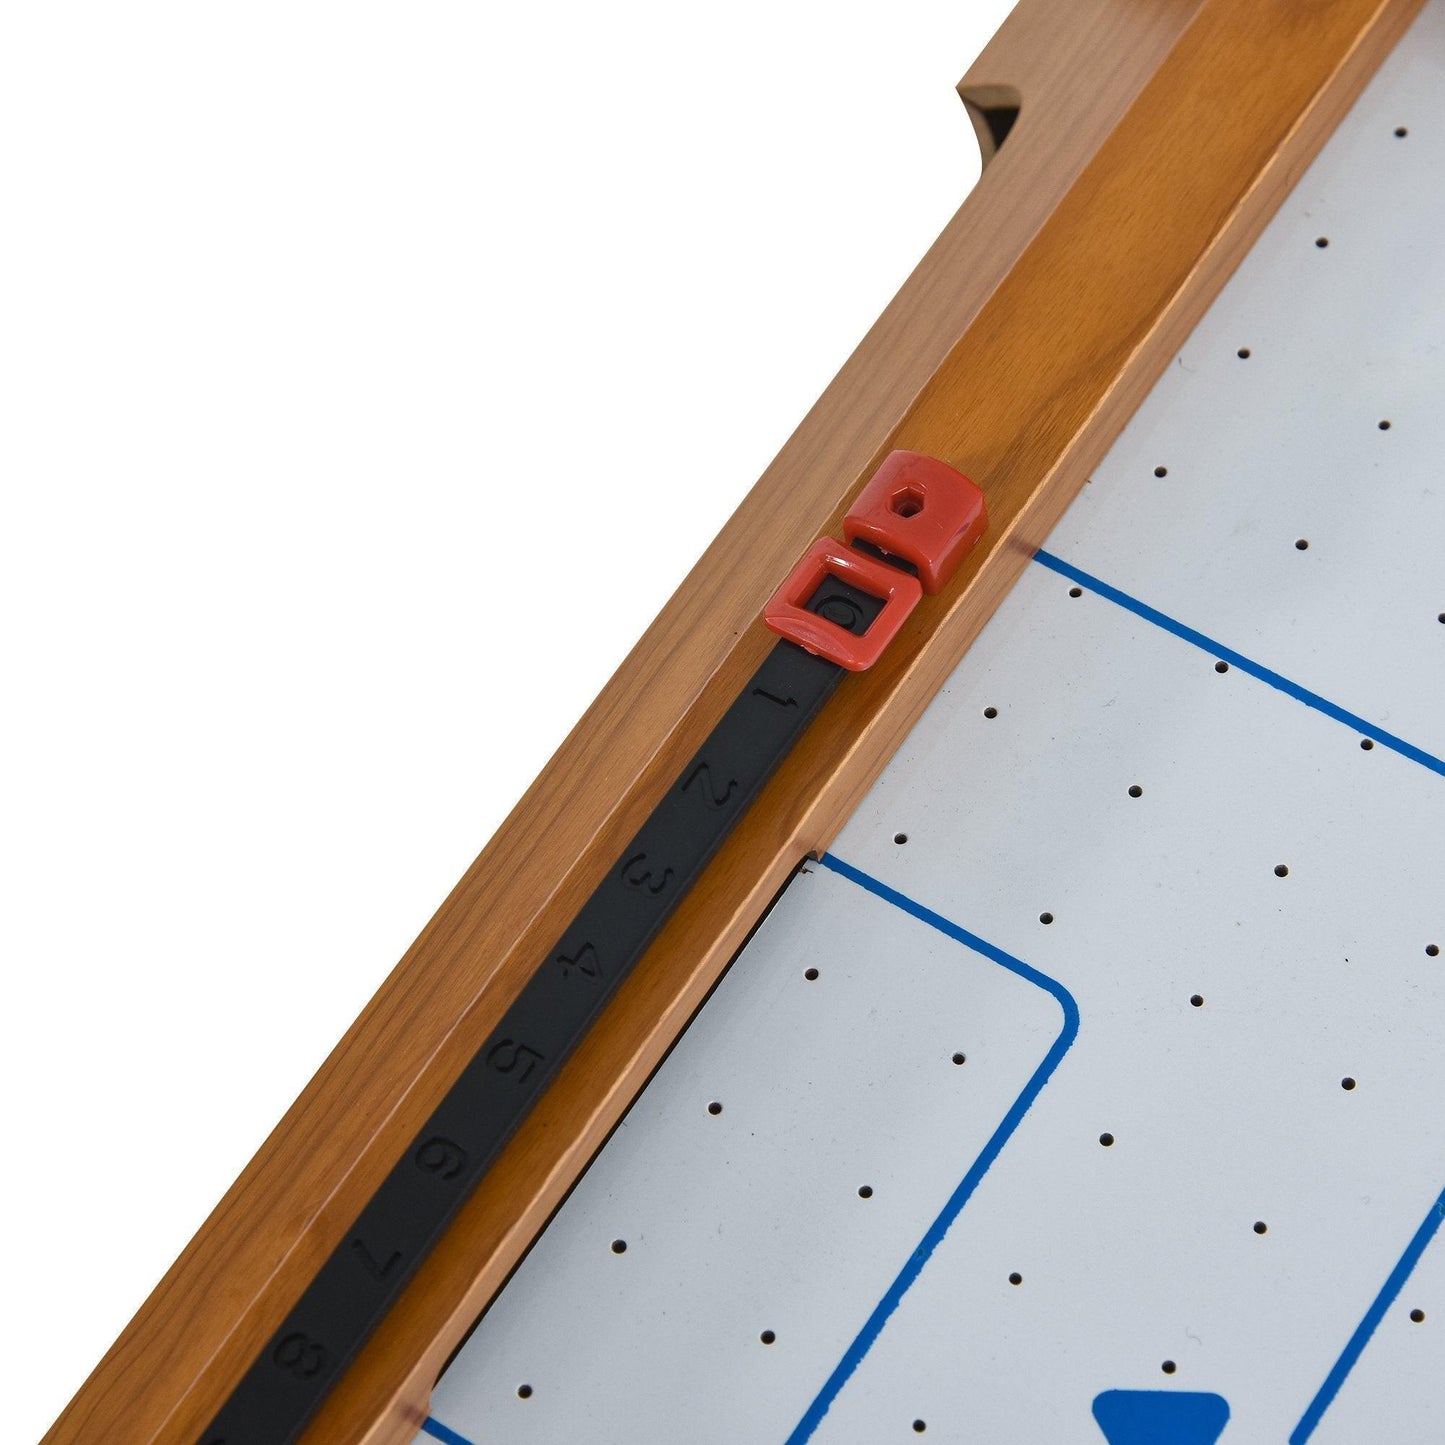 HOMCOM Air Hockey Table Set - Fun Game for All Ages - ALL4U RETAILER LTD